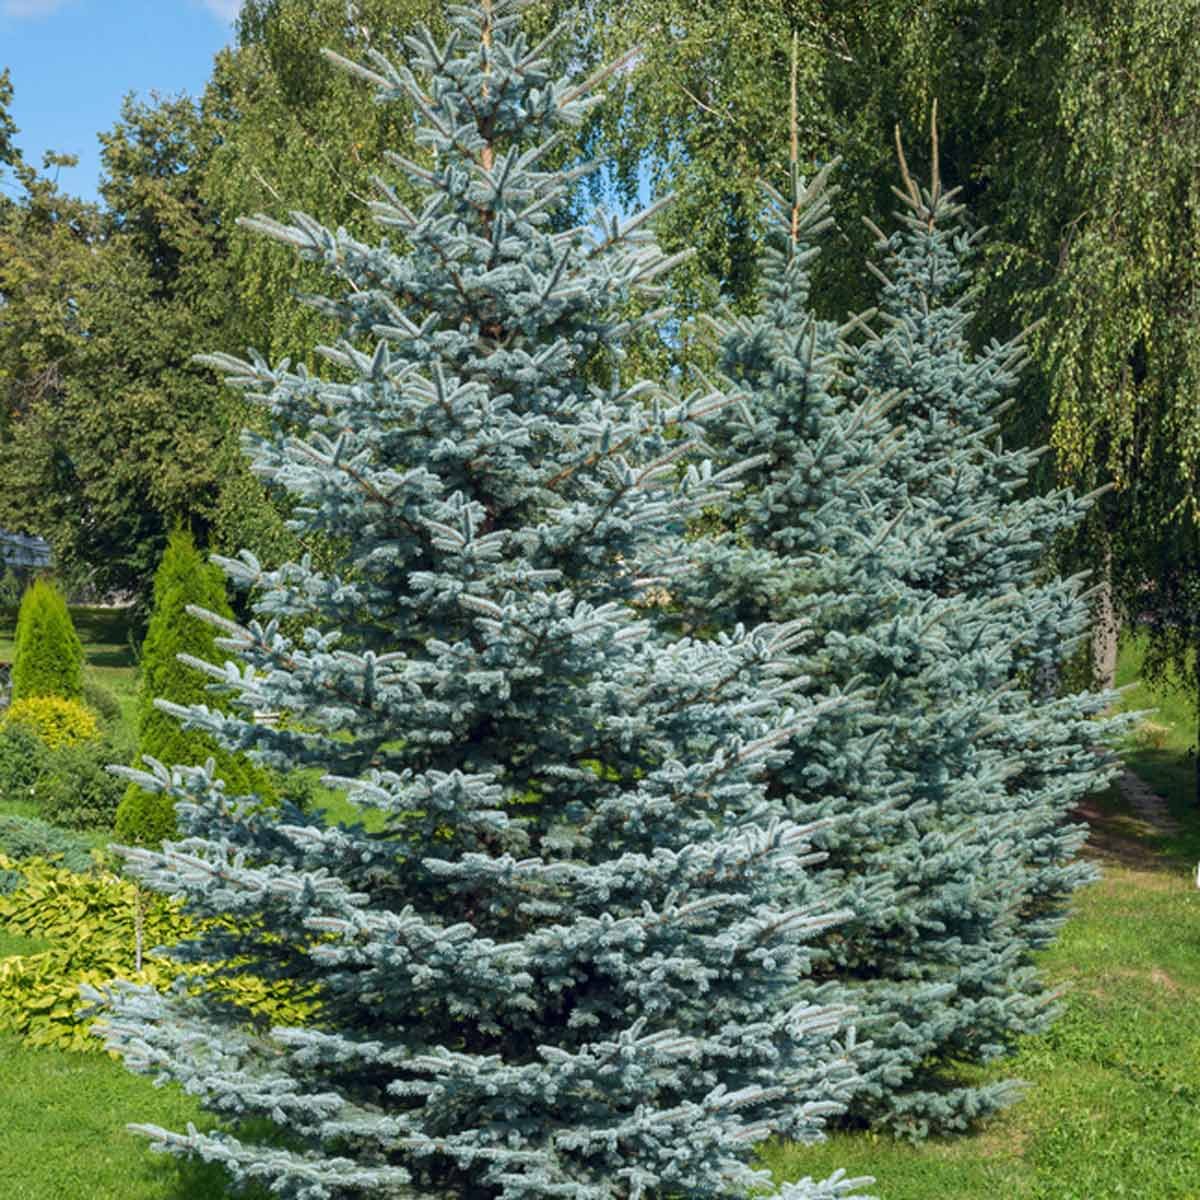 Colorado blue spruce (Picea pungens)